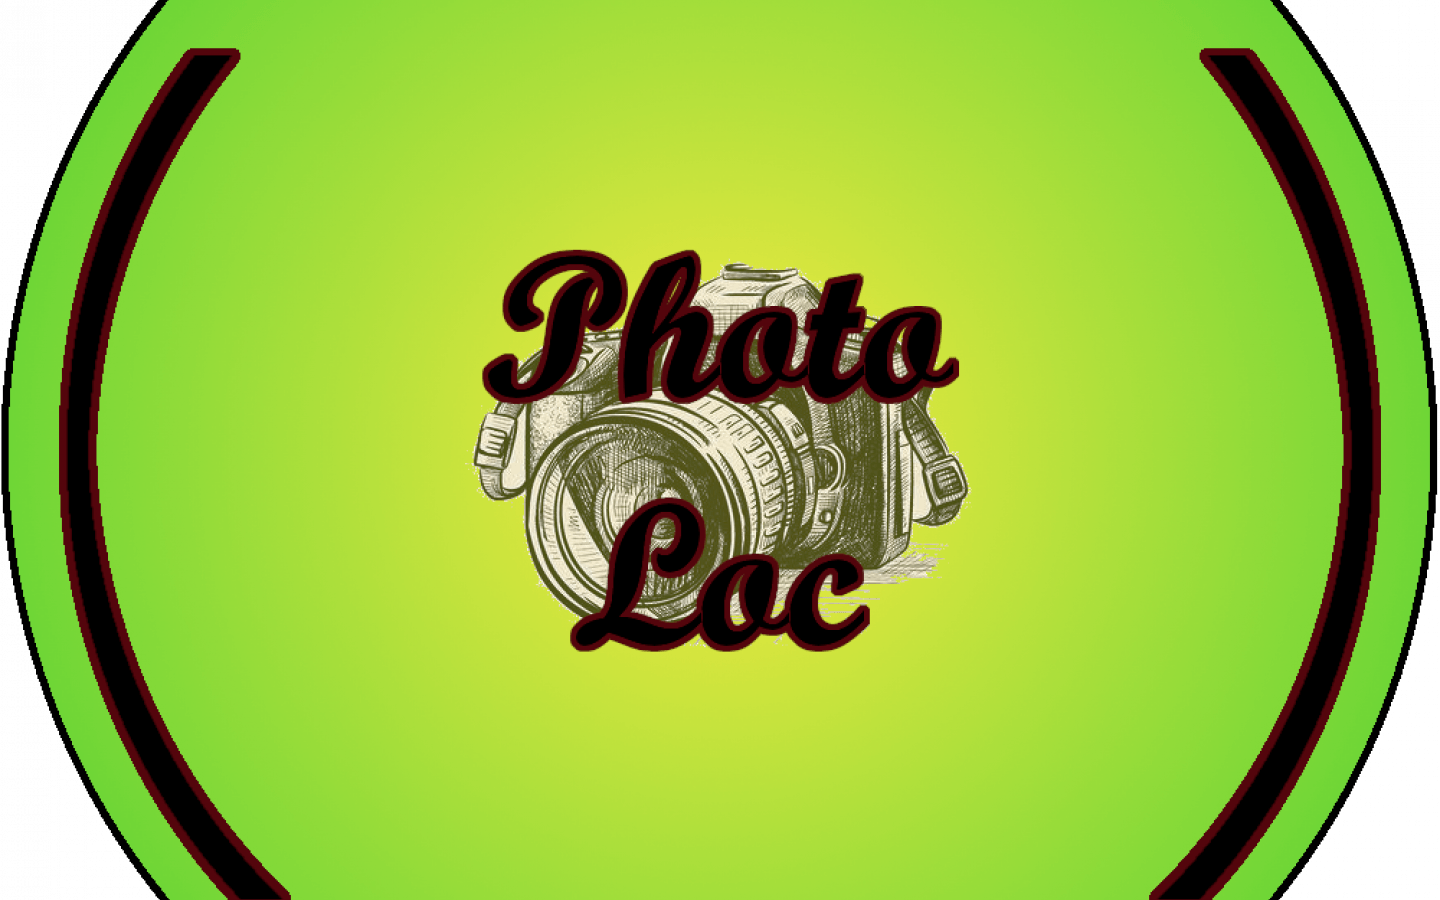 Photoloc